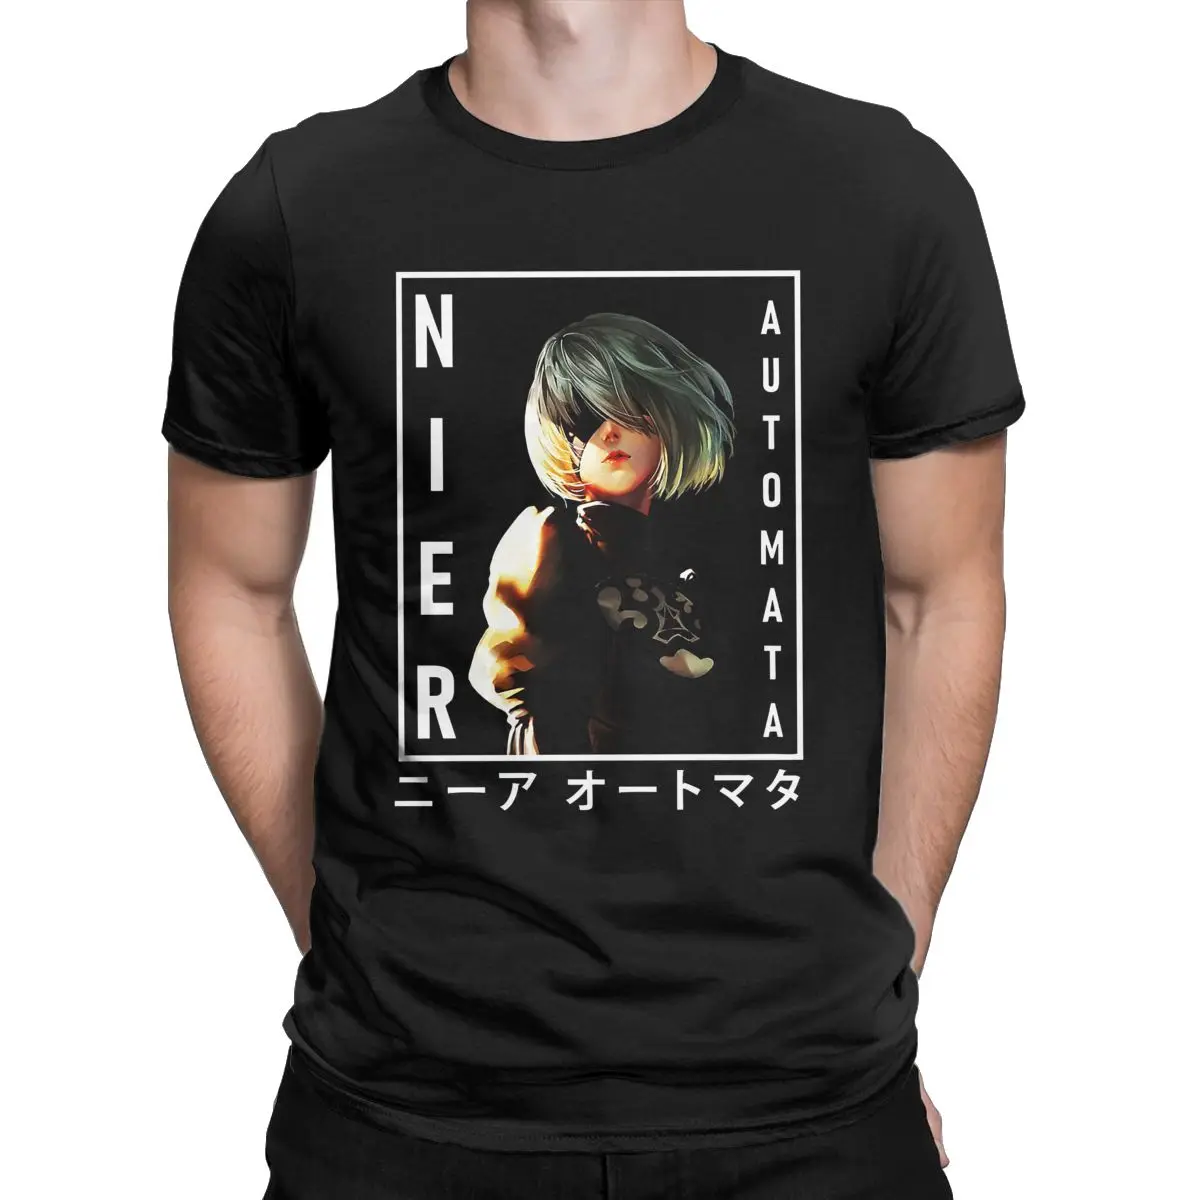 

Nier Automata 2B T Shirt YoRHa game t shirt for men 100% Cotton Creative T-Shirts O Neck Tee Shirt Short Sleeve Tops Gift Idea